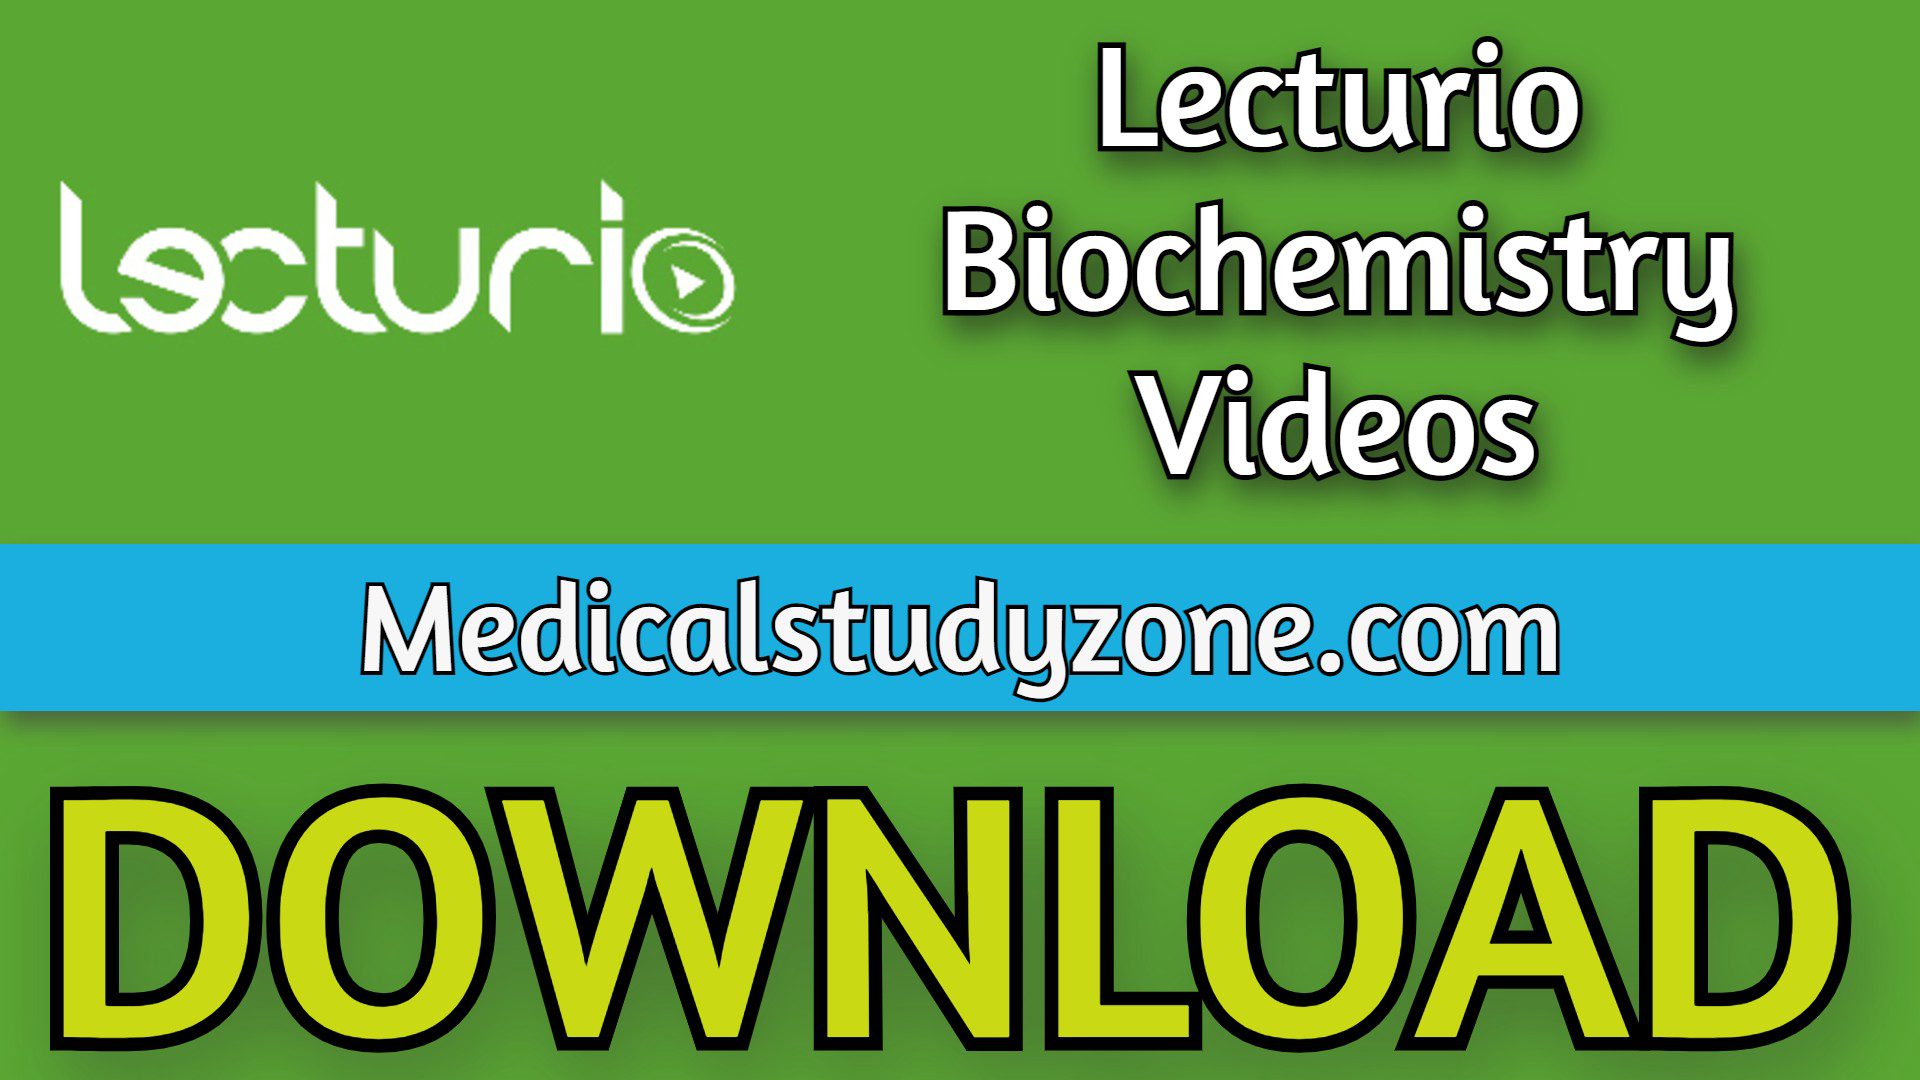 Lecturio Biochemistry Videos 2021 Free Download